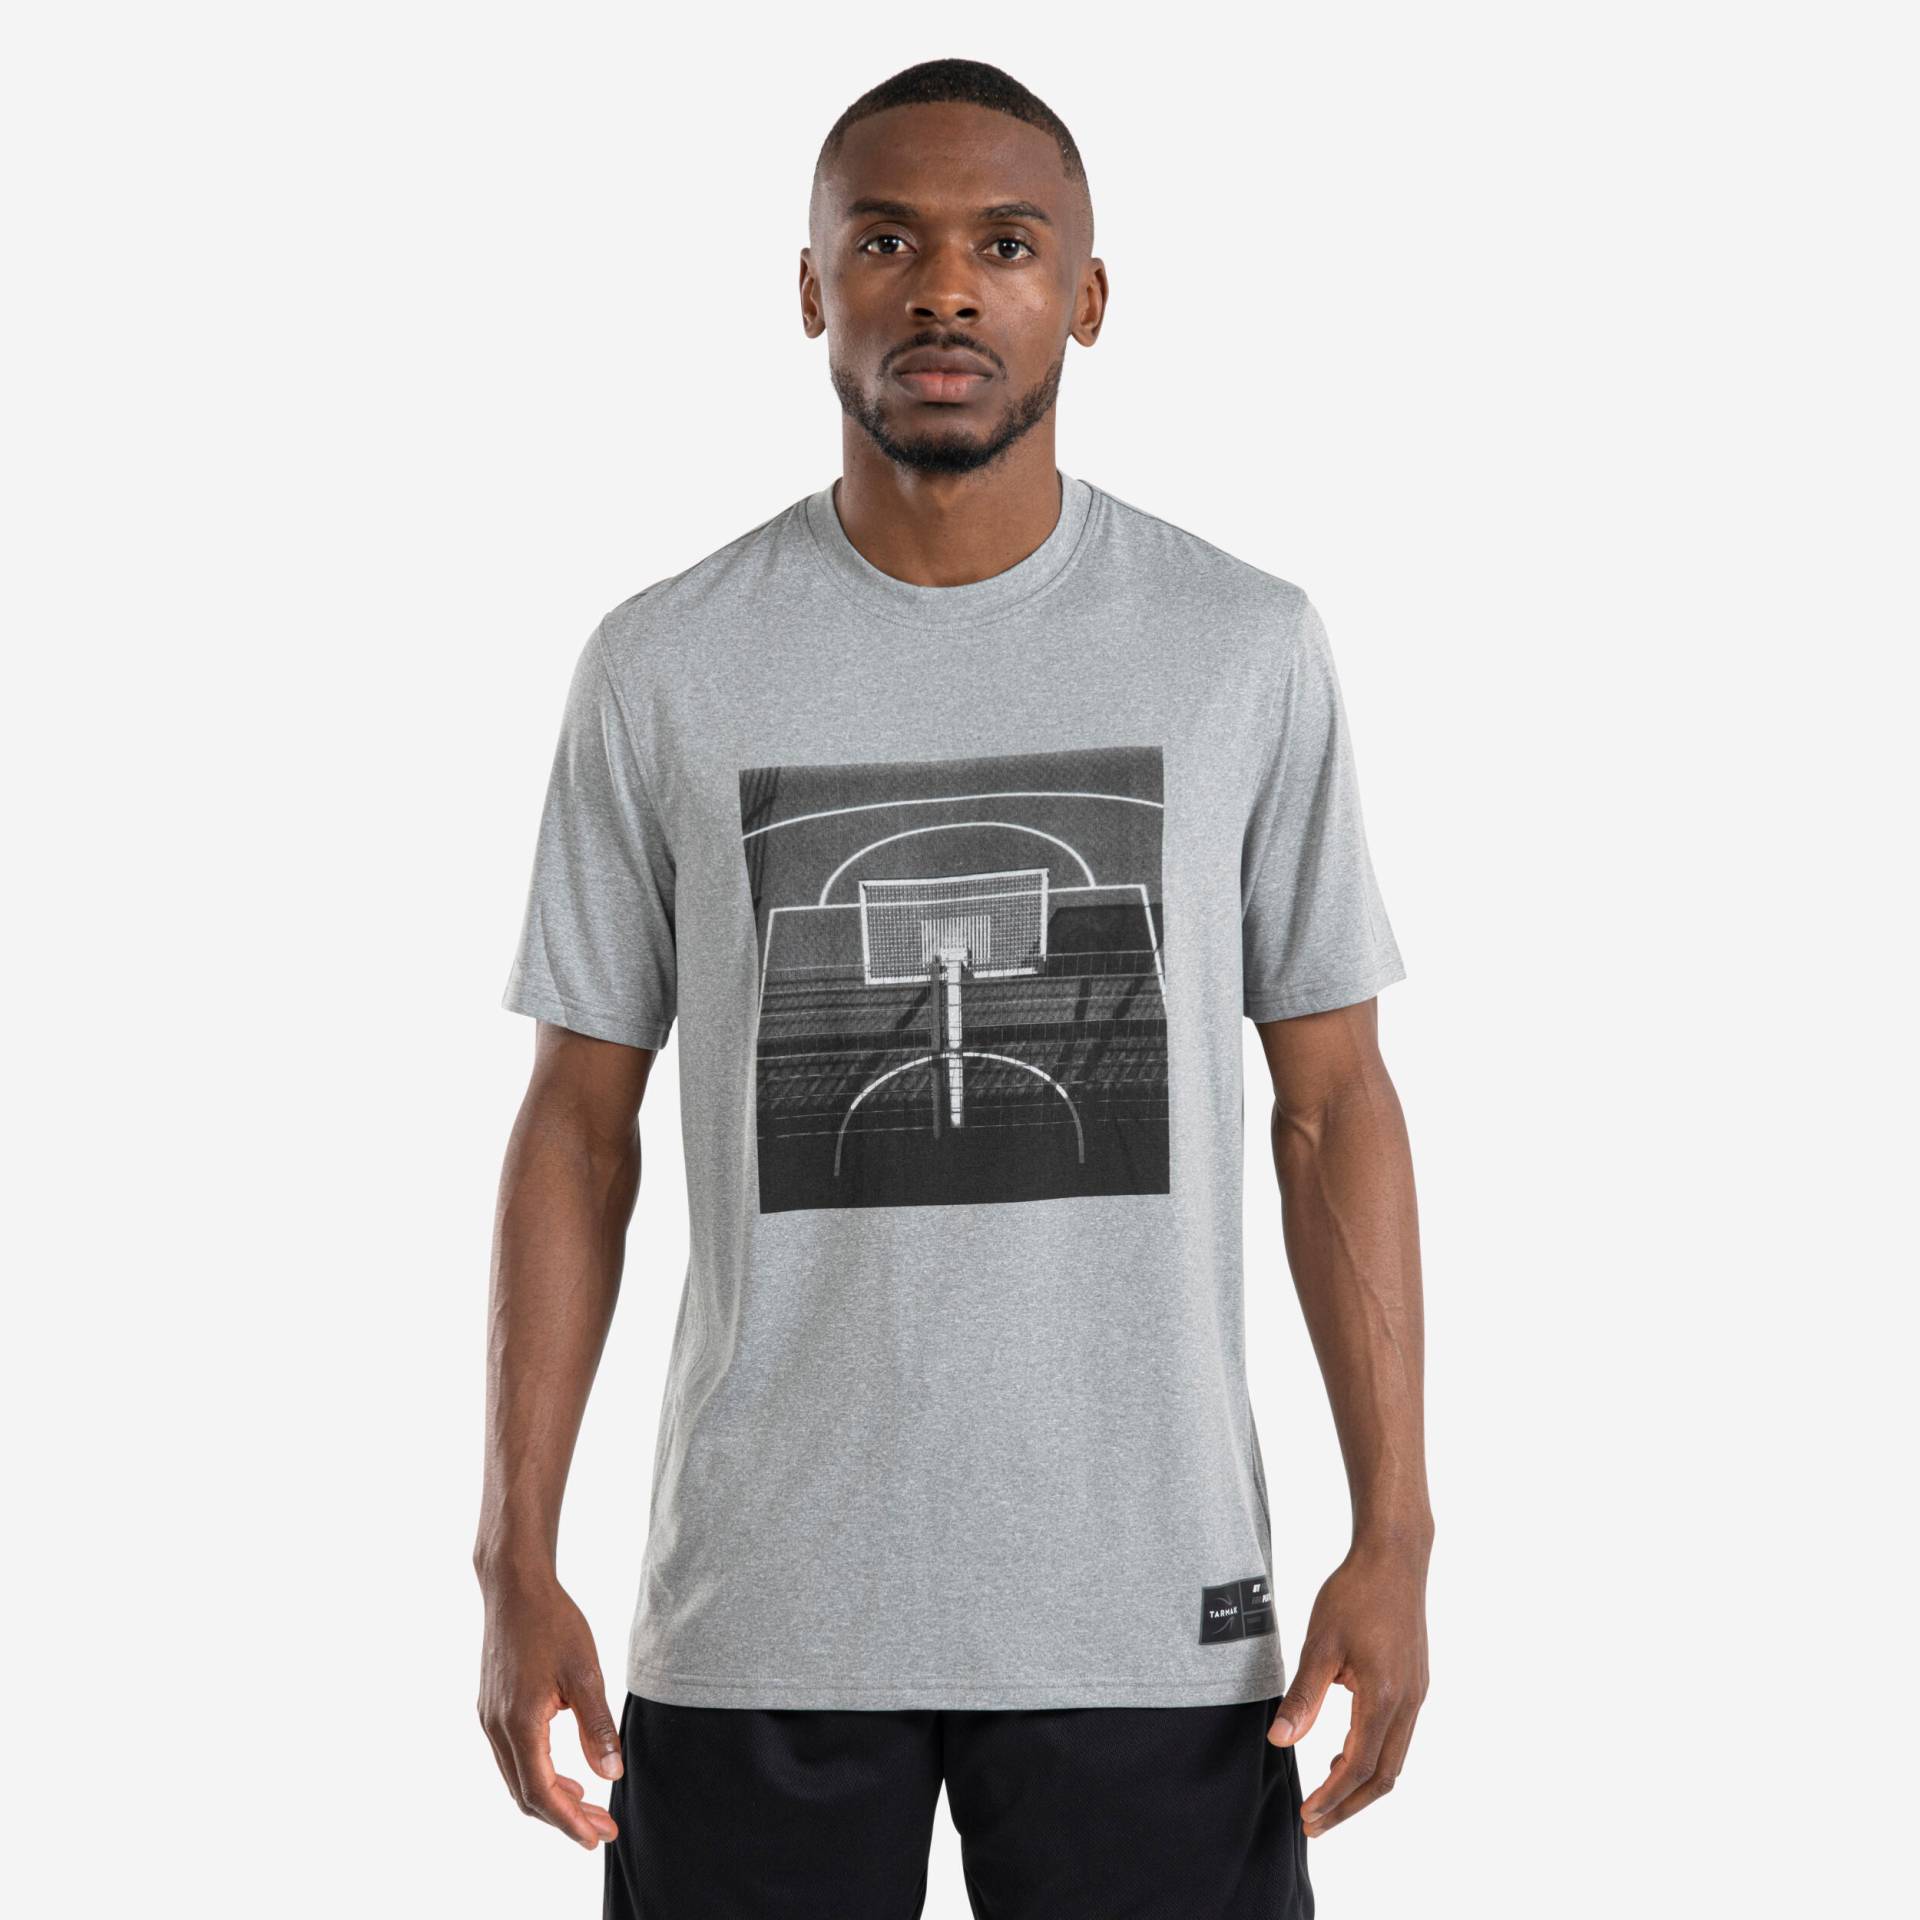 Herren Basketball T-Shirt - S500 Fast grau von TARMAK